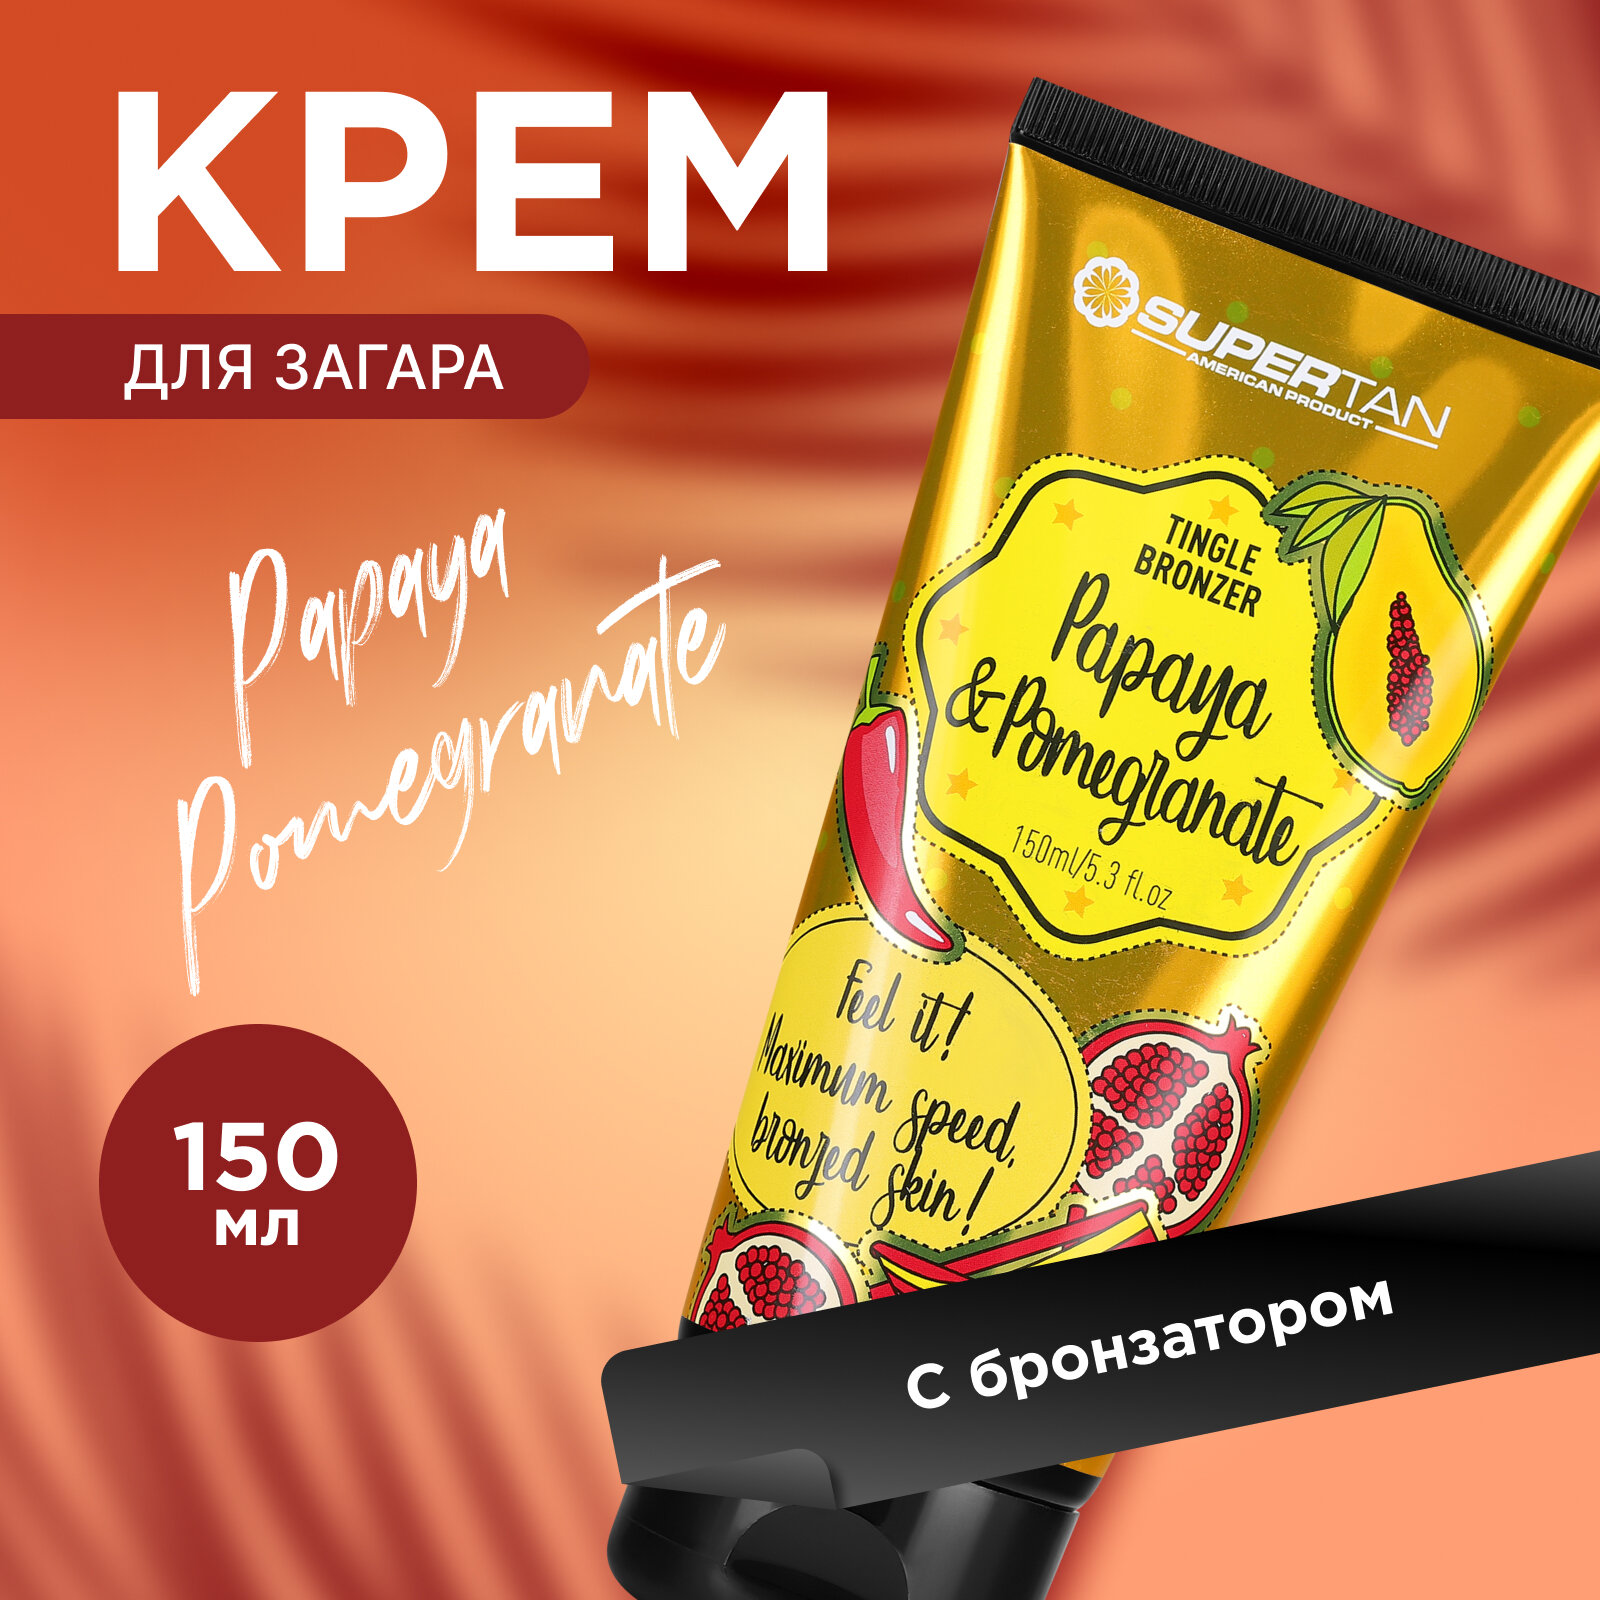 Крем для загара Supertan, Papaya&Pomegranate, 150 мл